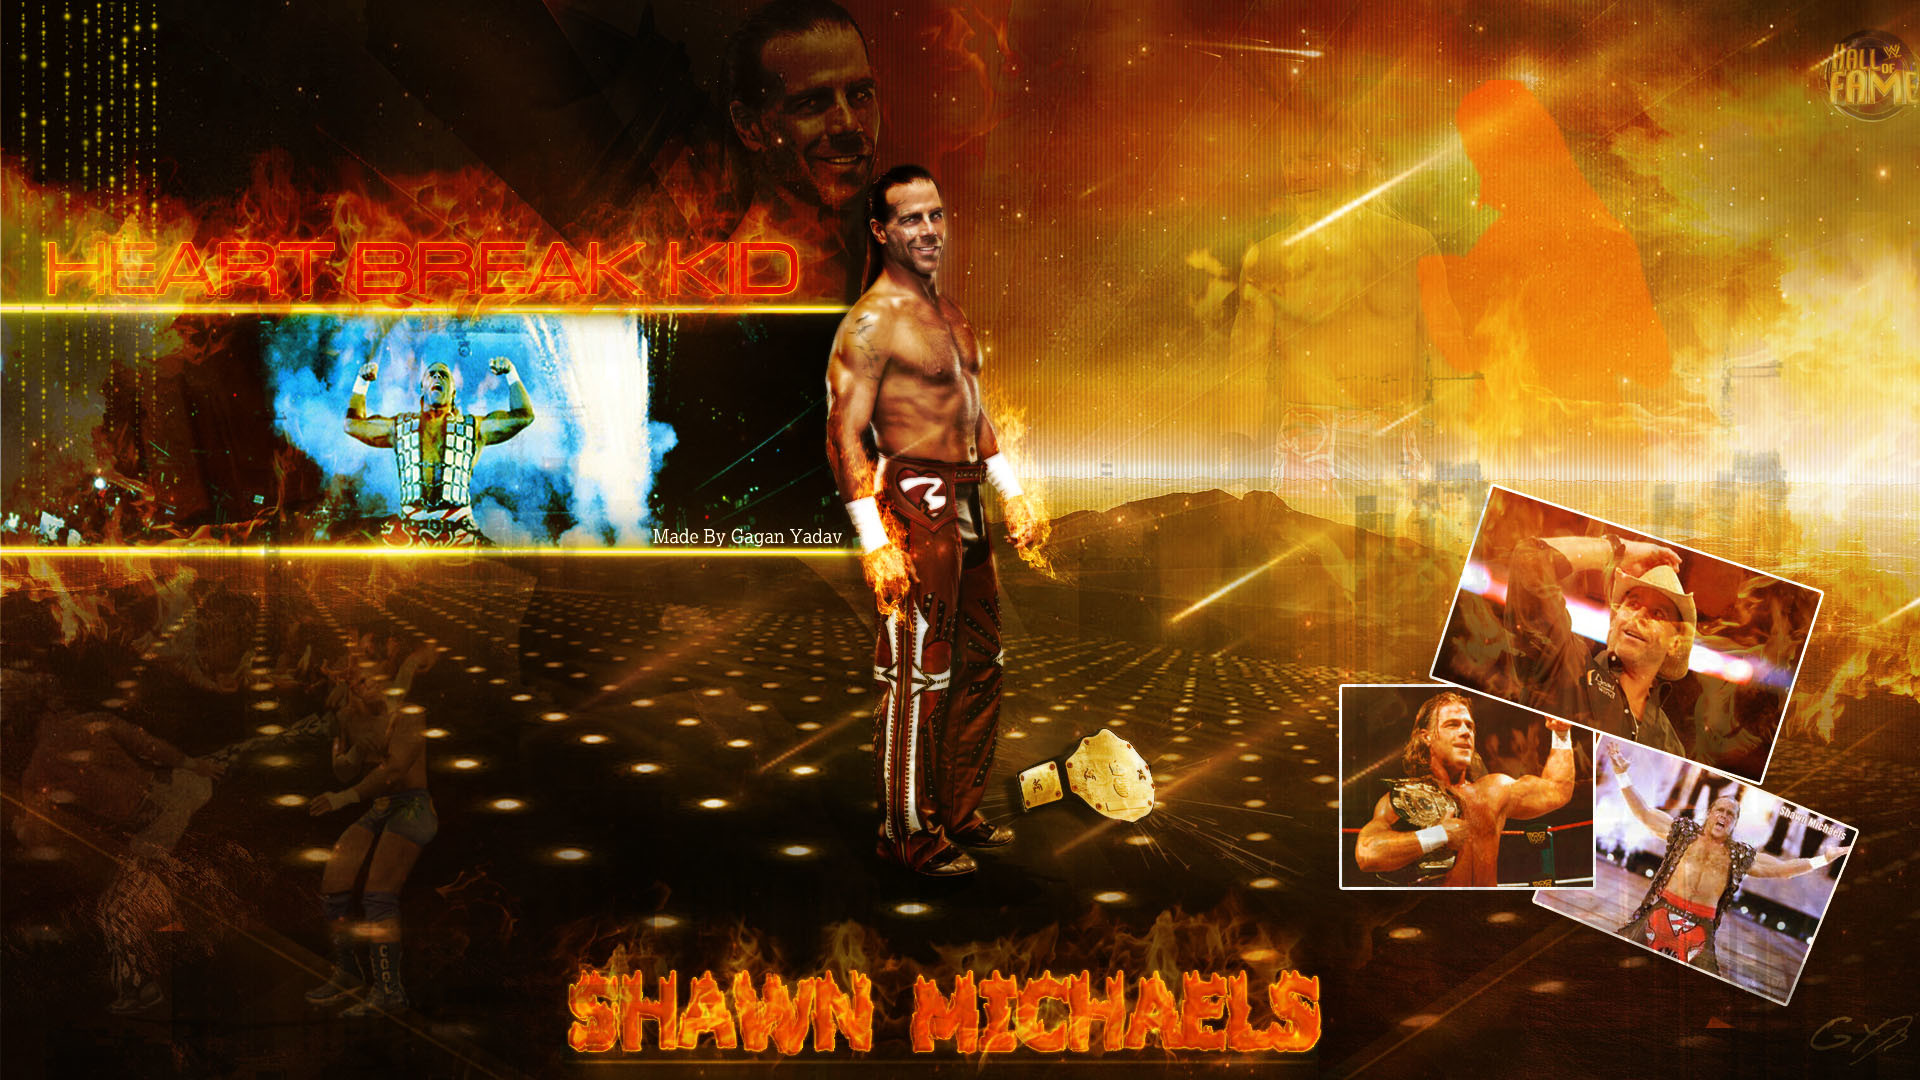 1920x1080 Shawn Michaels HBK Wallpaper by GJ30GaganJ30 Shawn Michaels HBK Wallpaper  by GJ30GaganJ30